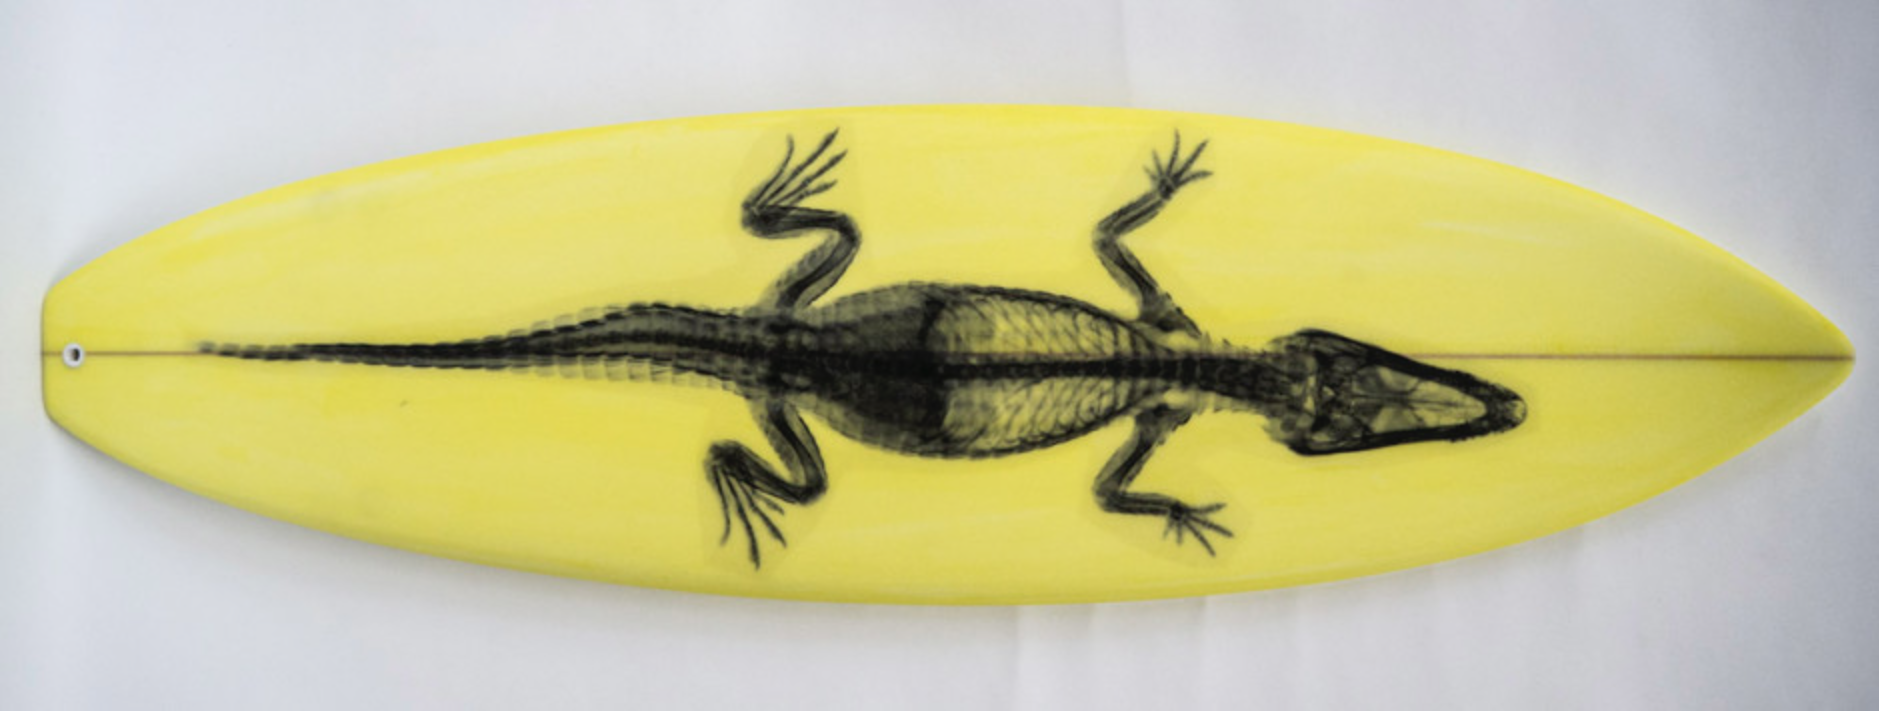 004, Black Gator on Yellow, 2013